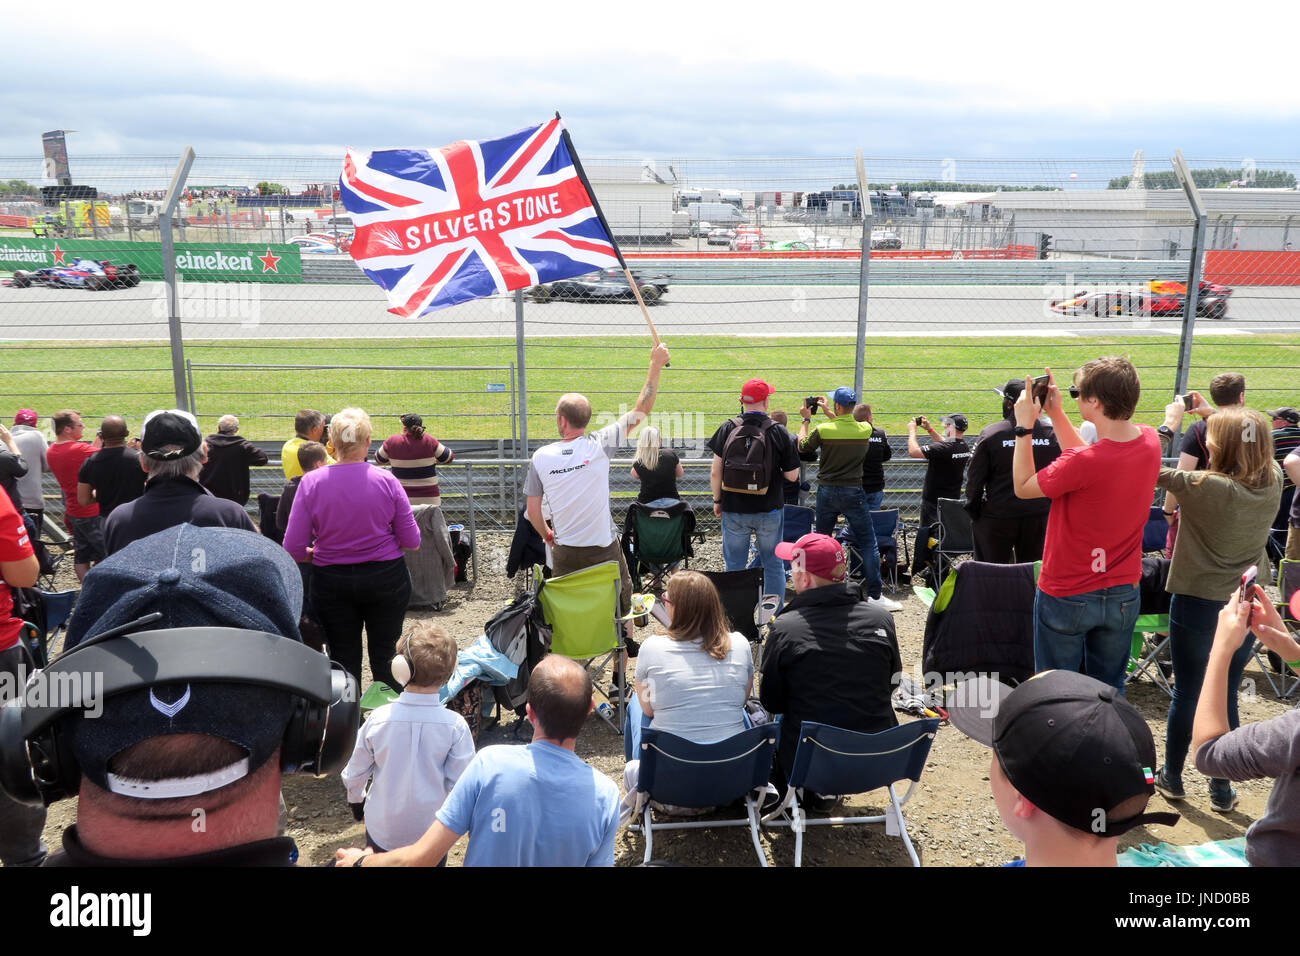 Silverstone-Flagge am Formel 1-Rennstrecke Stockfoto